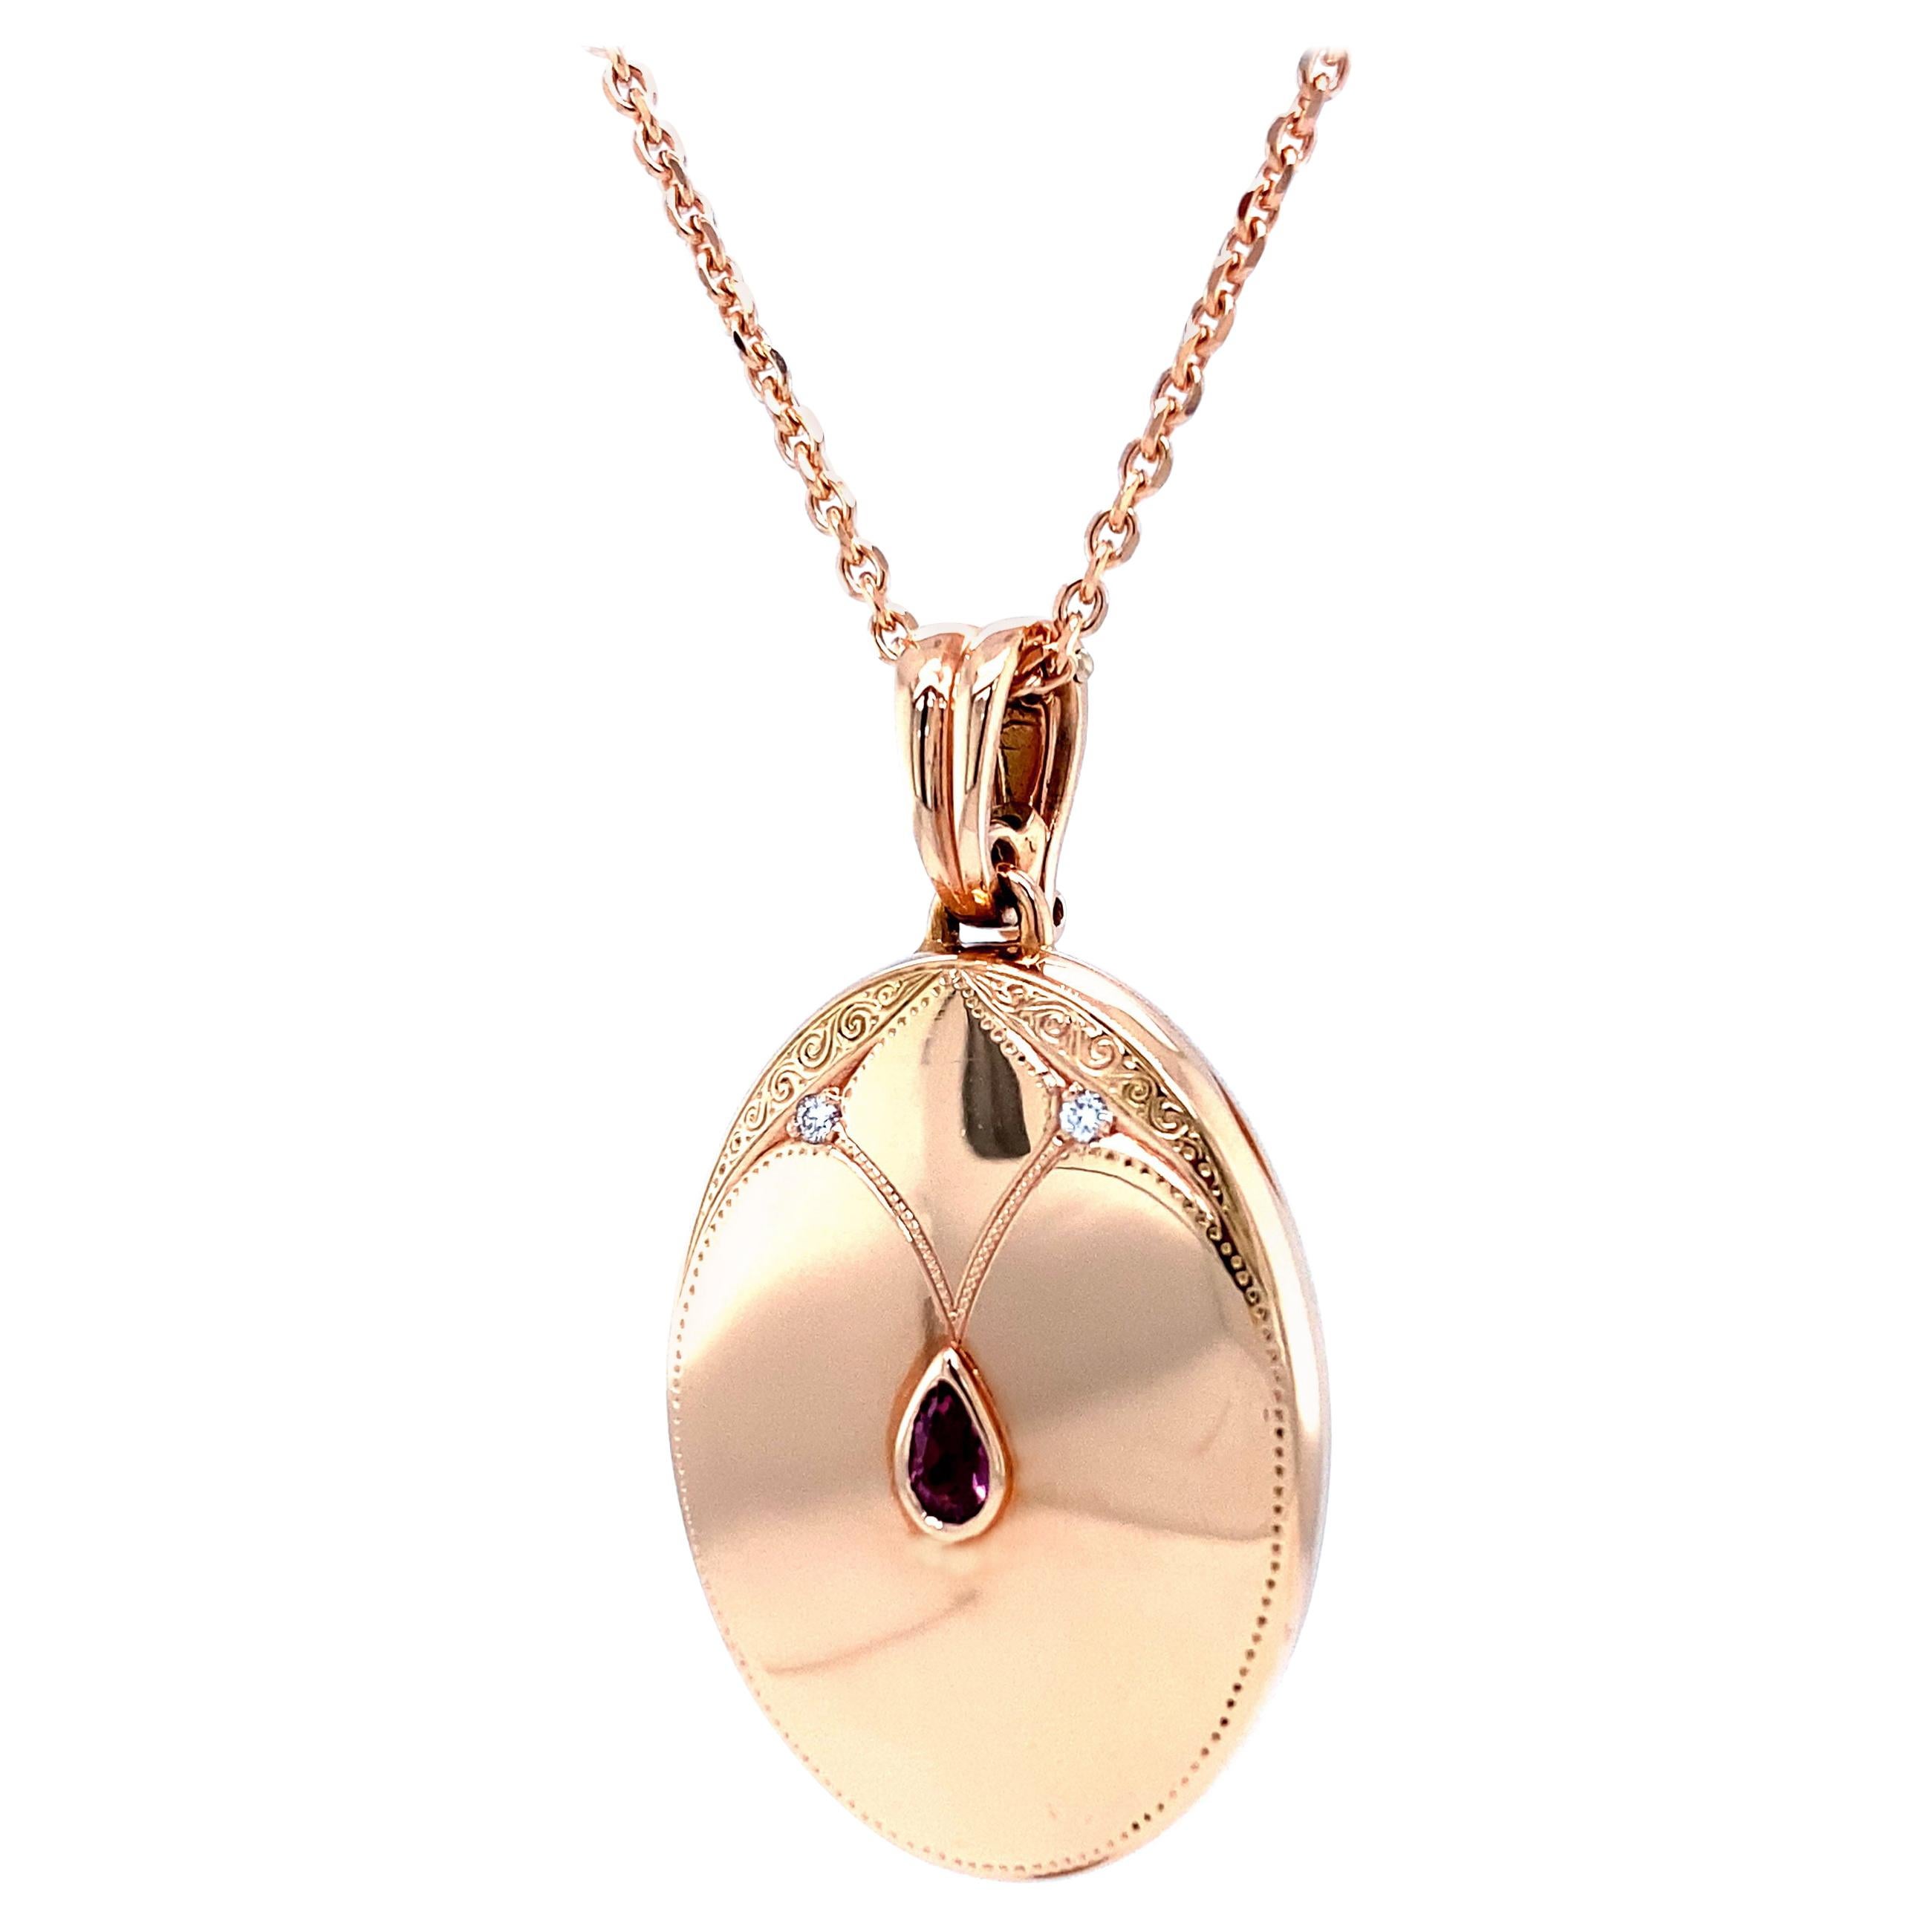 Ovales verziertes Medaillon mit Anhänger aus 18 Karat Roségold mit 2 Diamanten 0,04 Karat rosa Turmalin